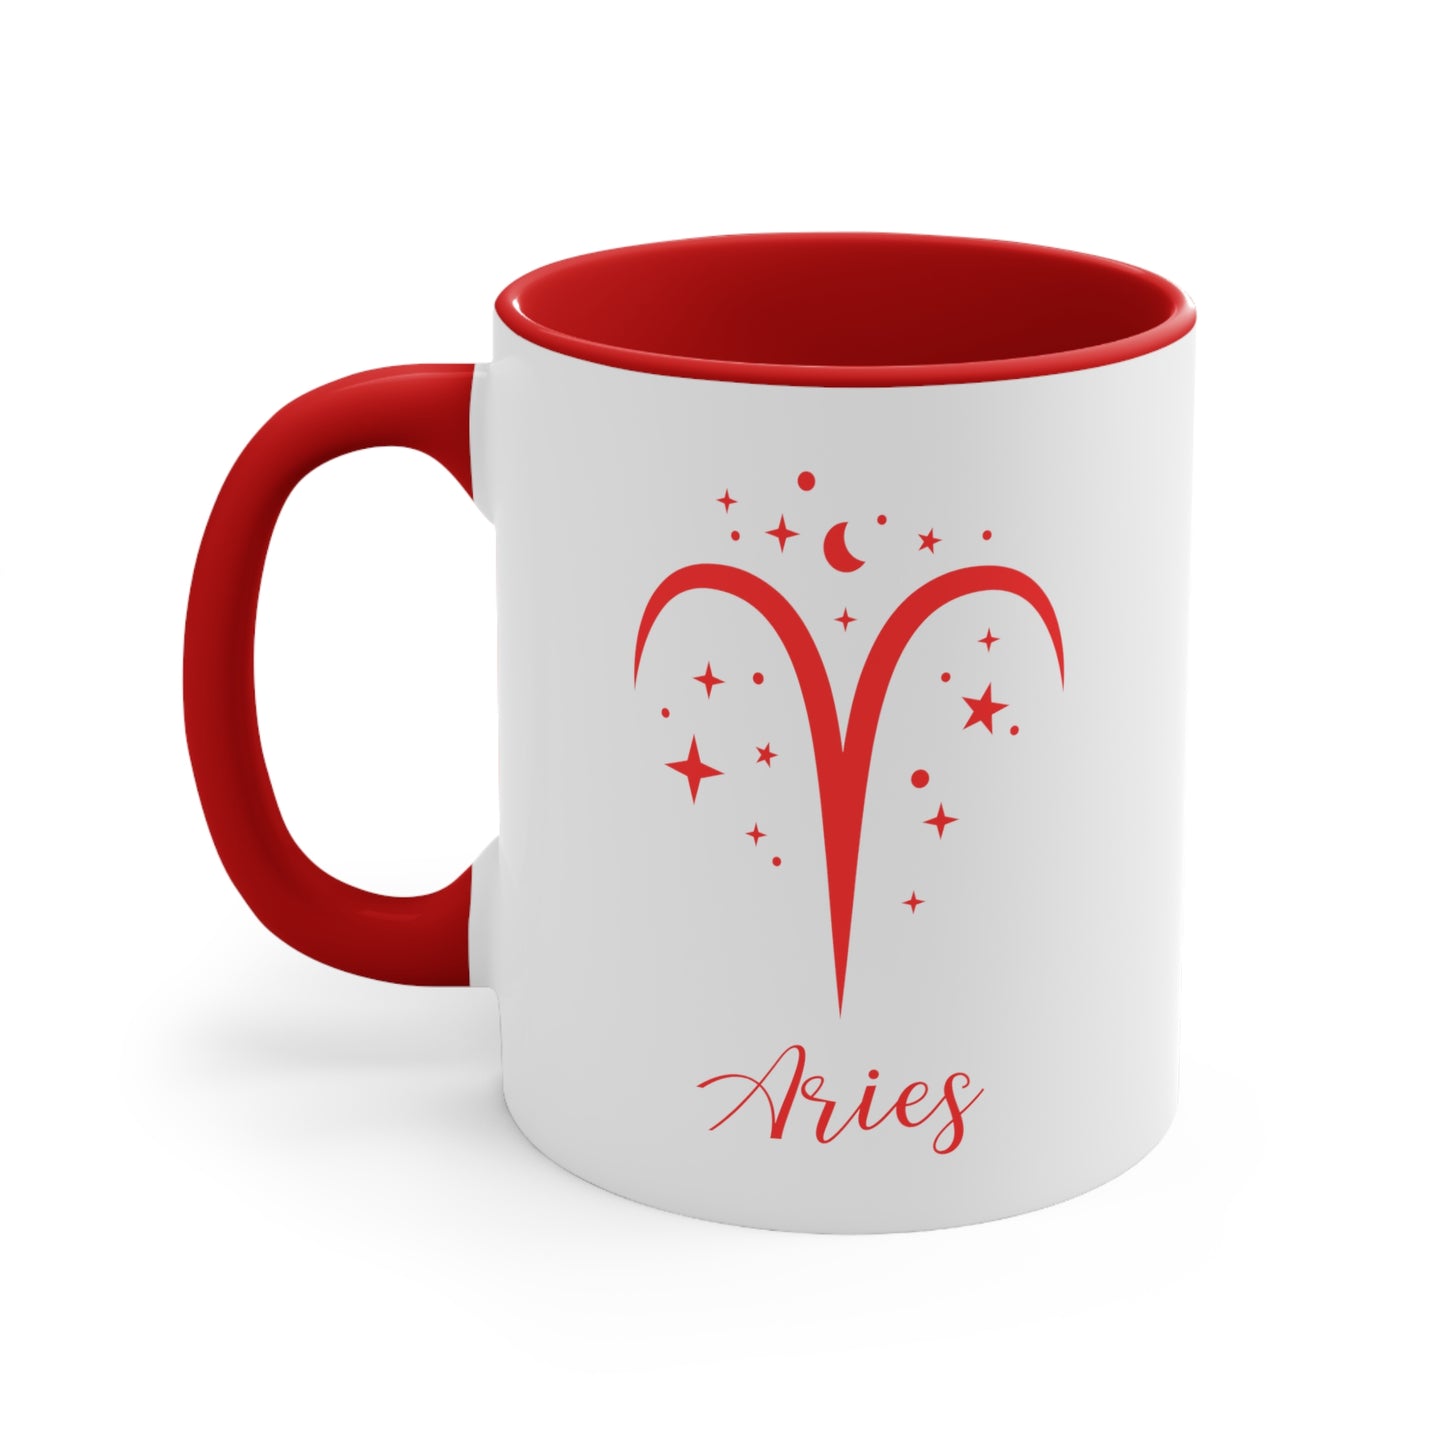 Aries glyph & stars coffee mug